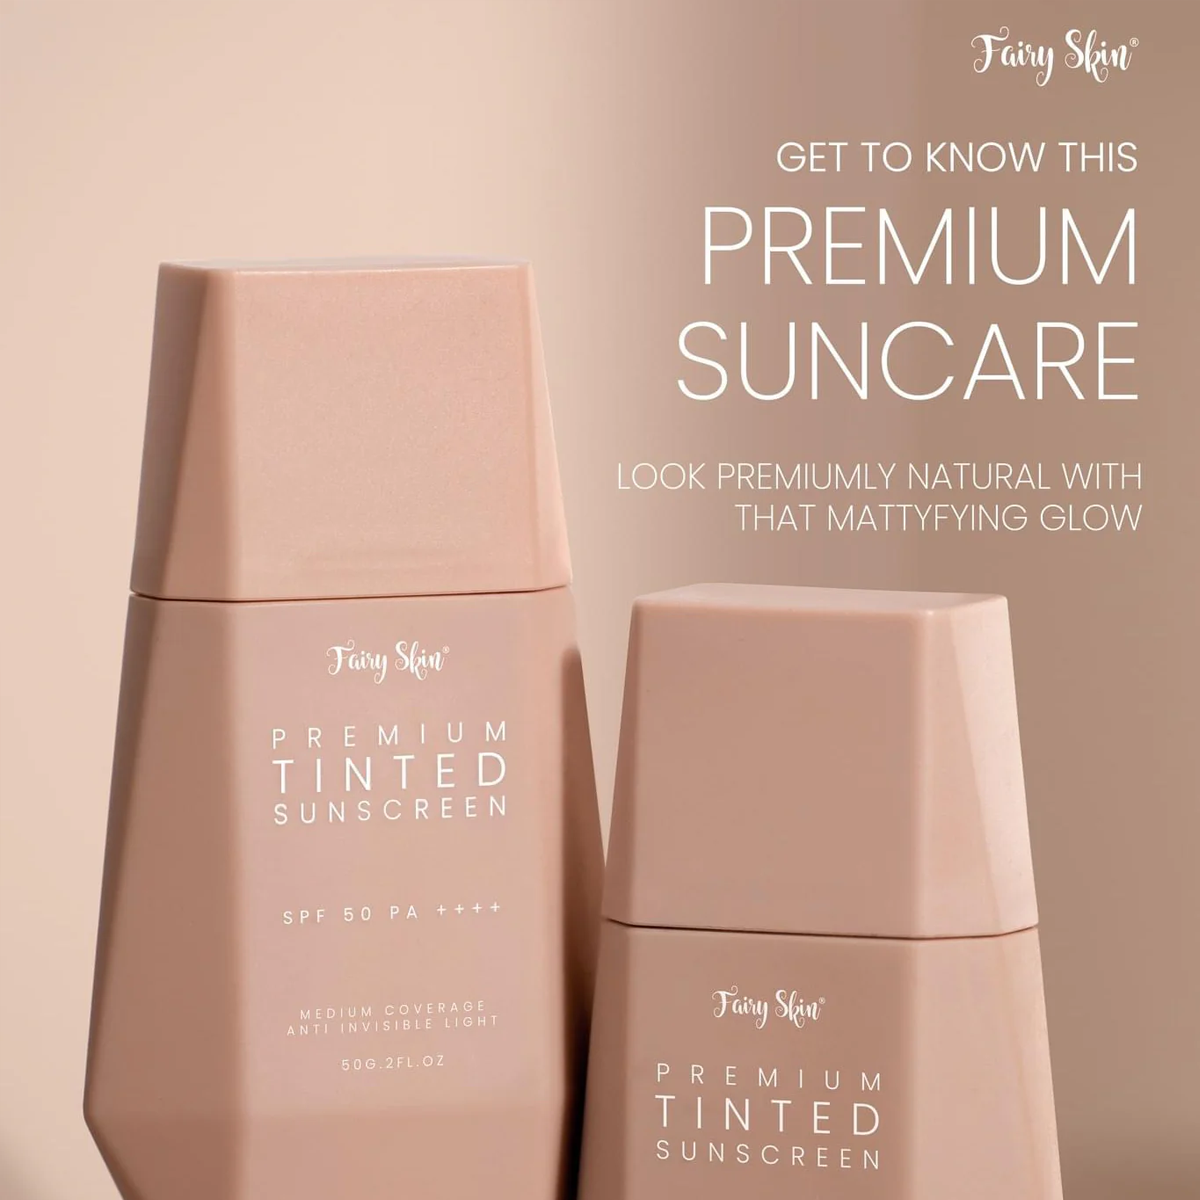 Fairy Skin Premium Tinted Sunscreen - information